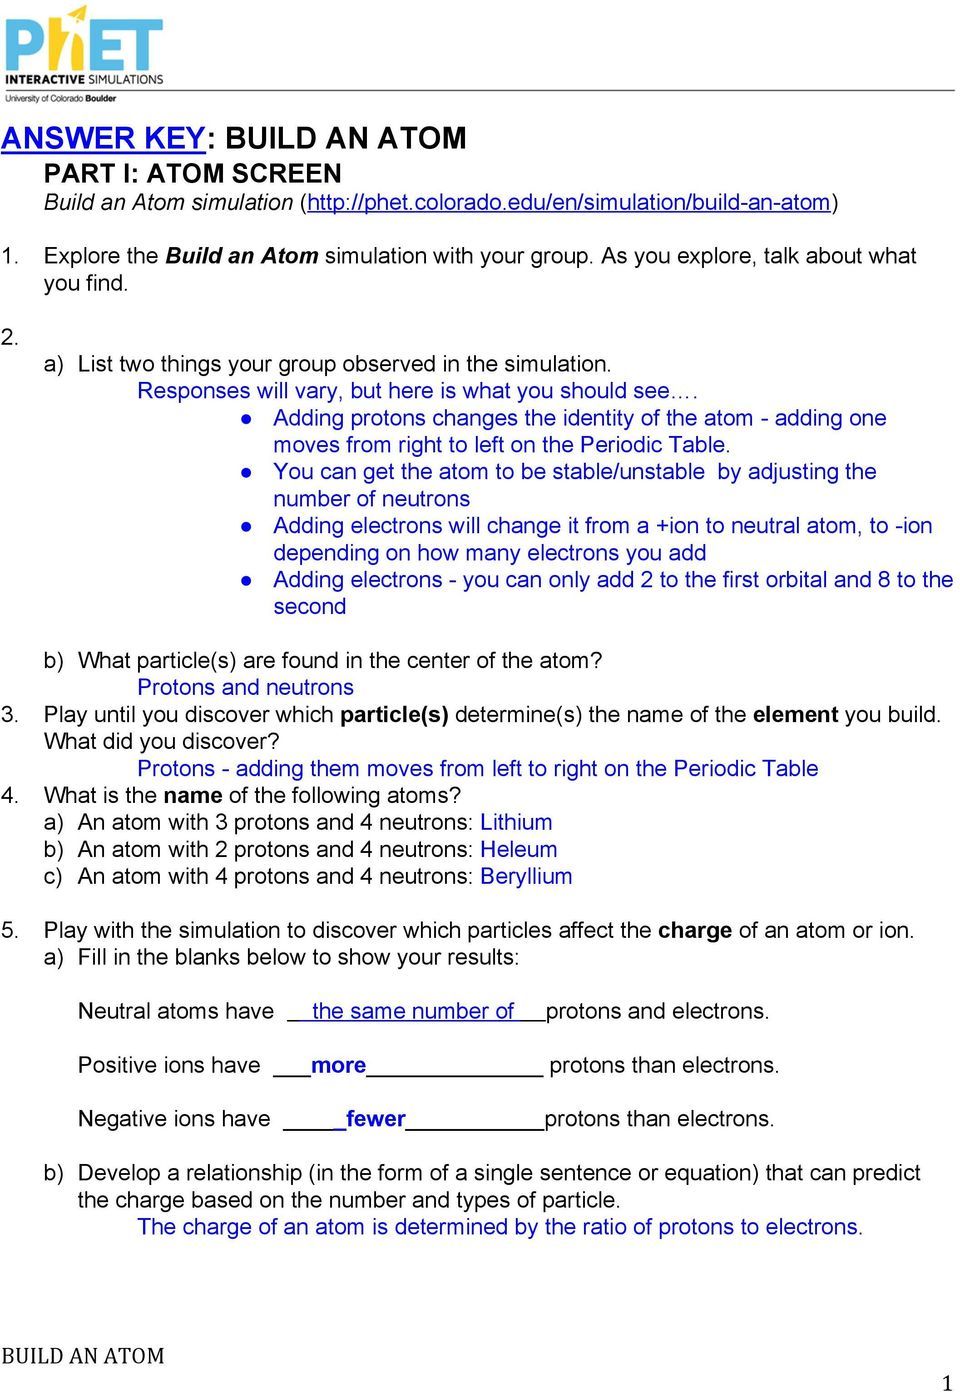 inquiry into life lab manual pdf